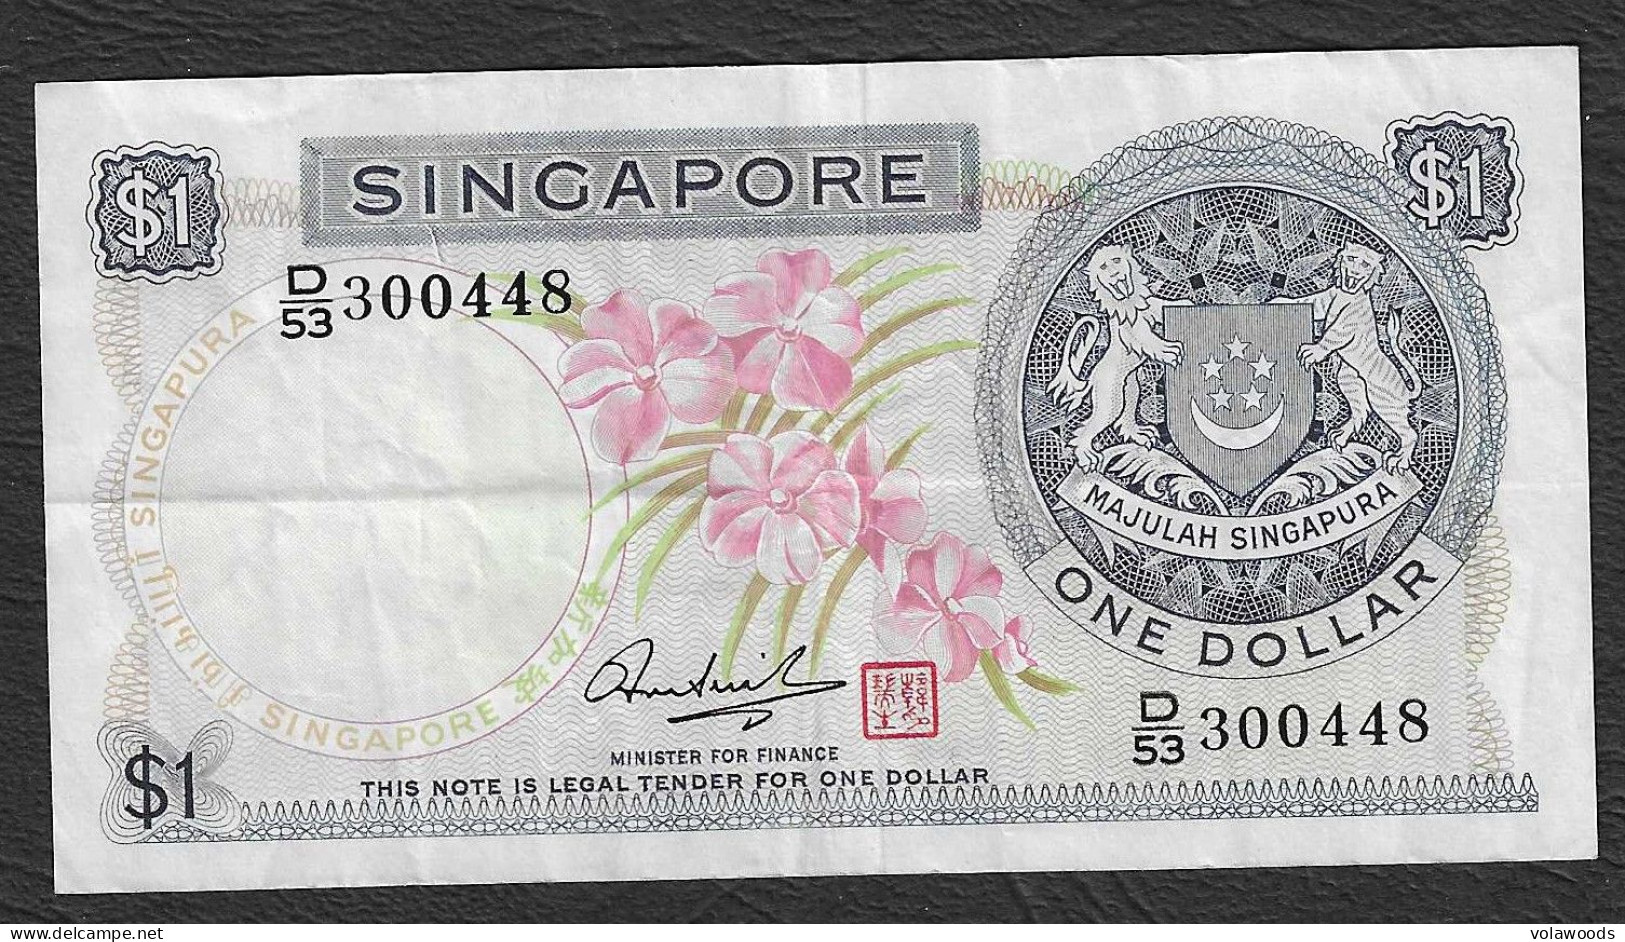 Singapore - Banconota Circolata Da 1 Dollaro P-1d - 1972 #19 - Singapur